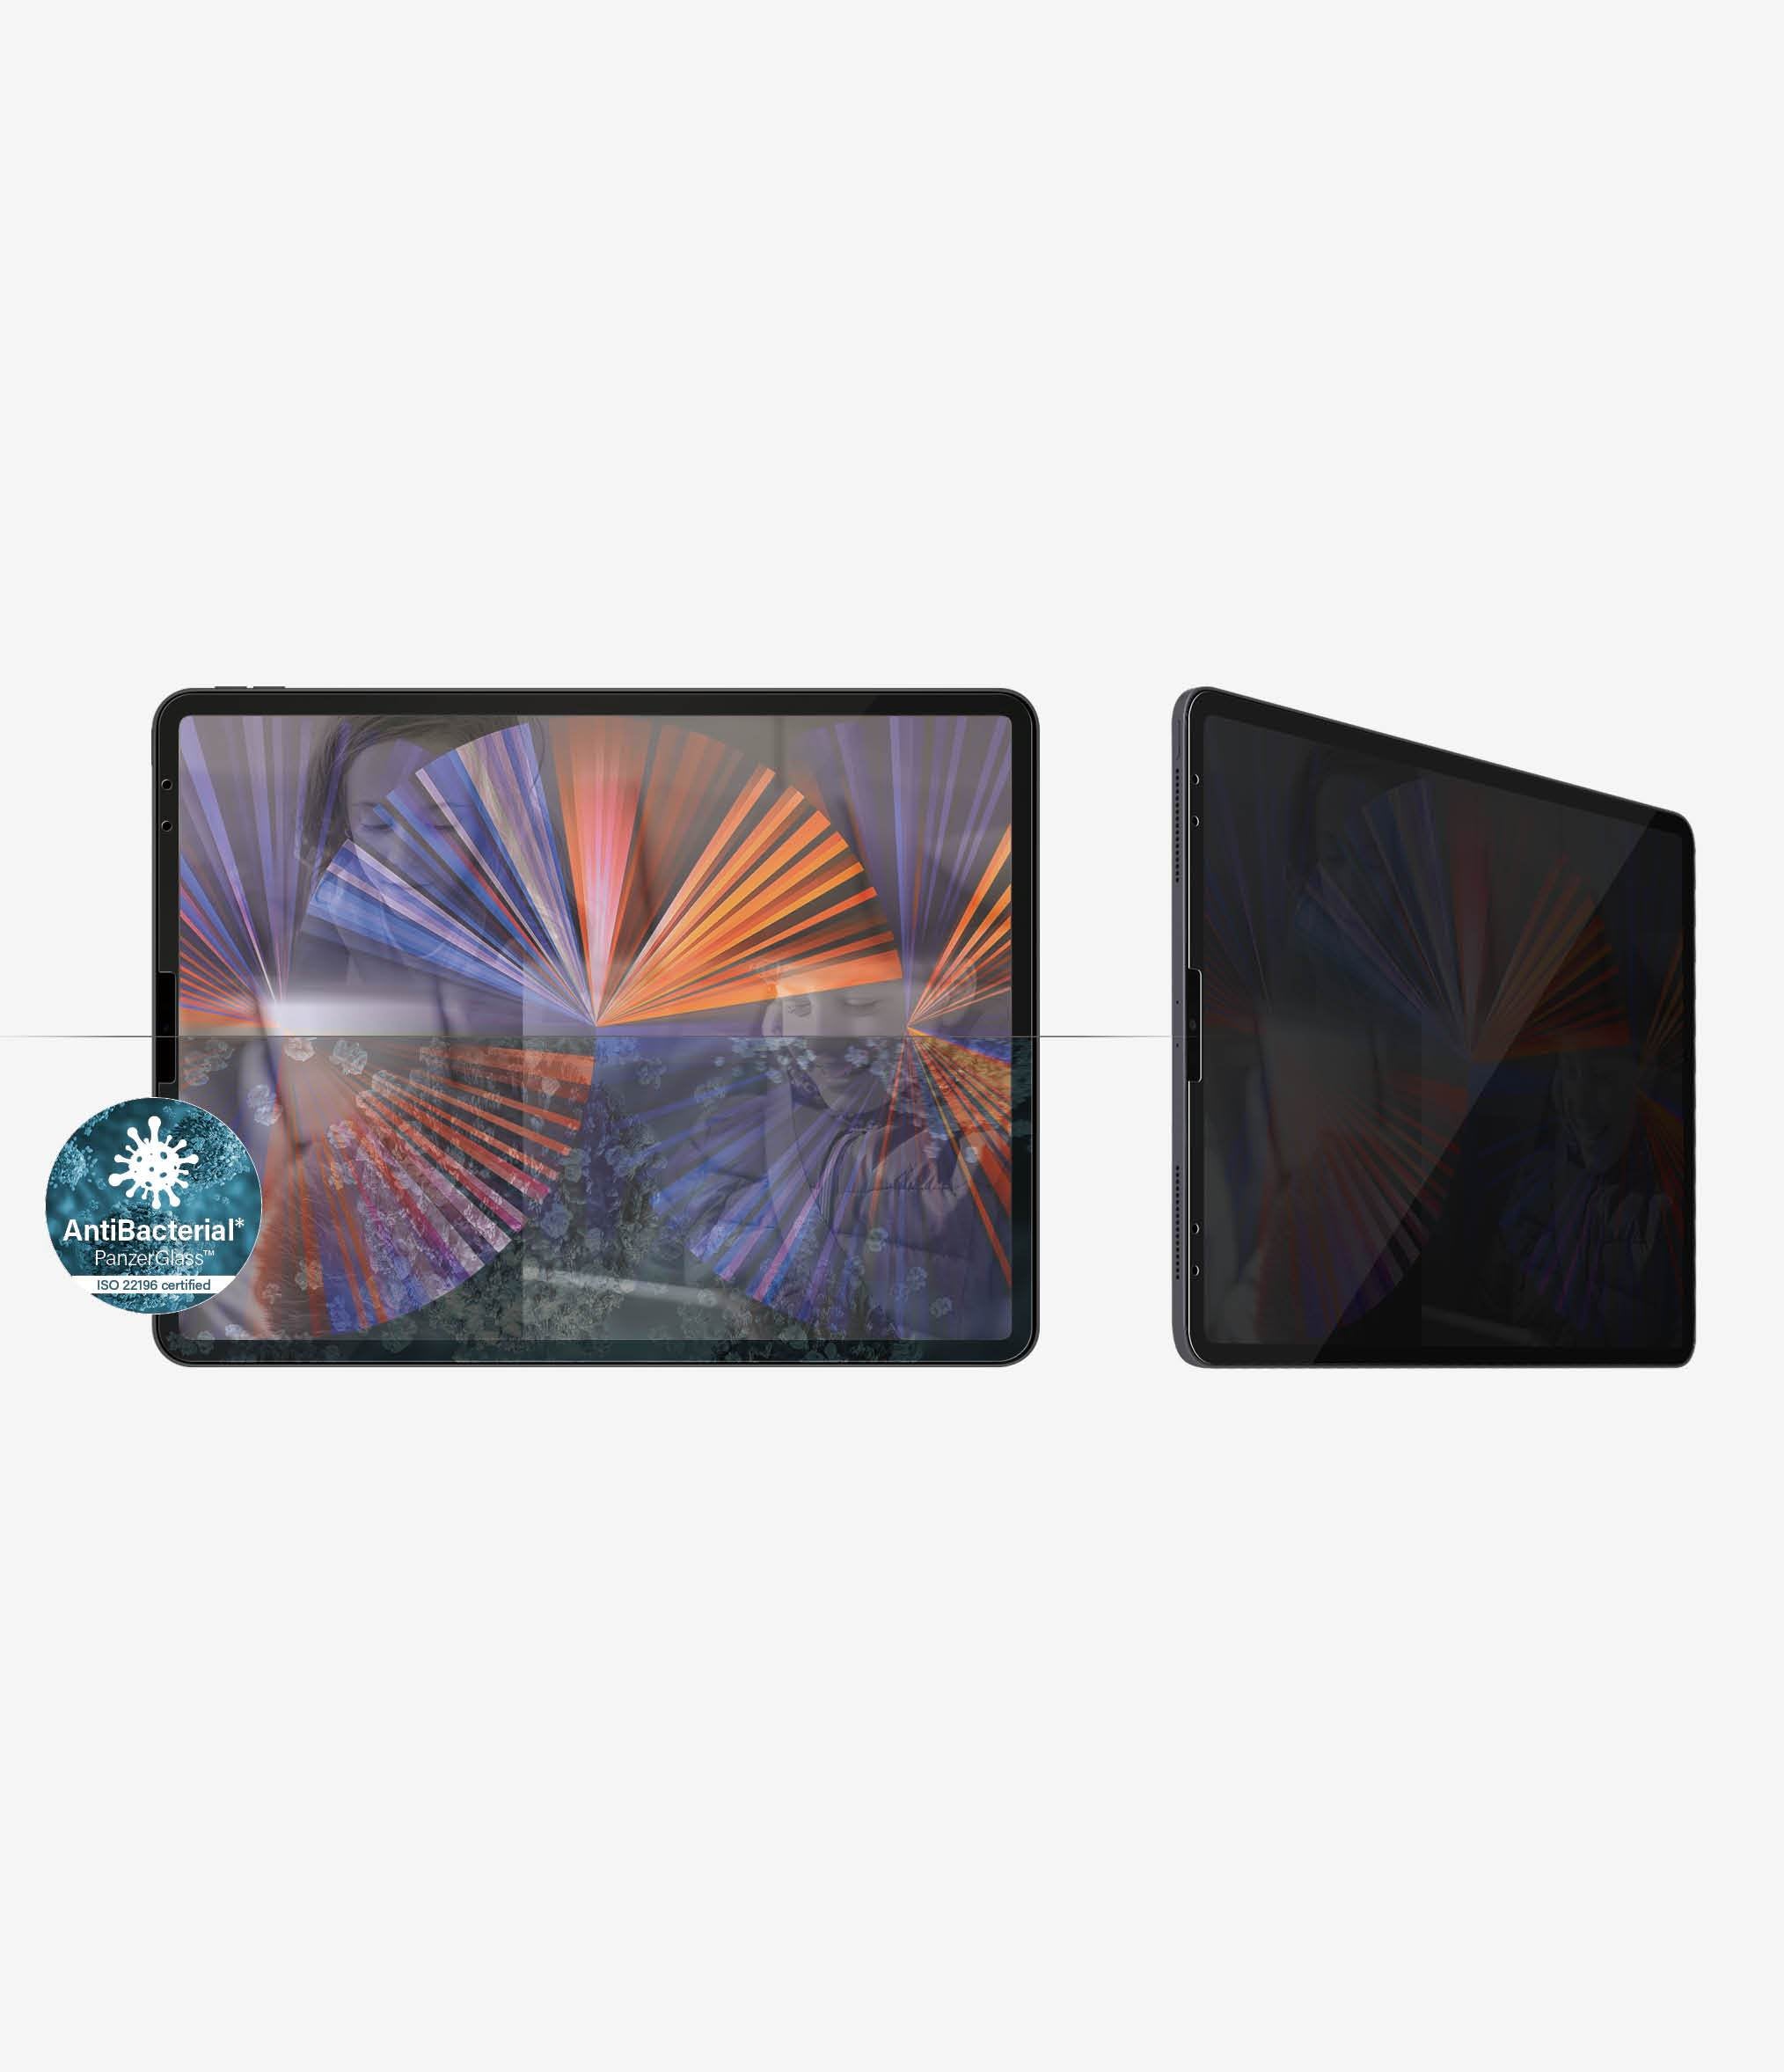 PanzerGlass Tempered Glass Privacy iPad Pro 12.9" (2020)